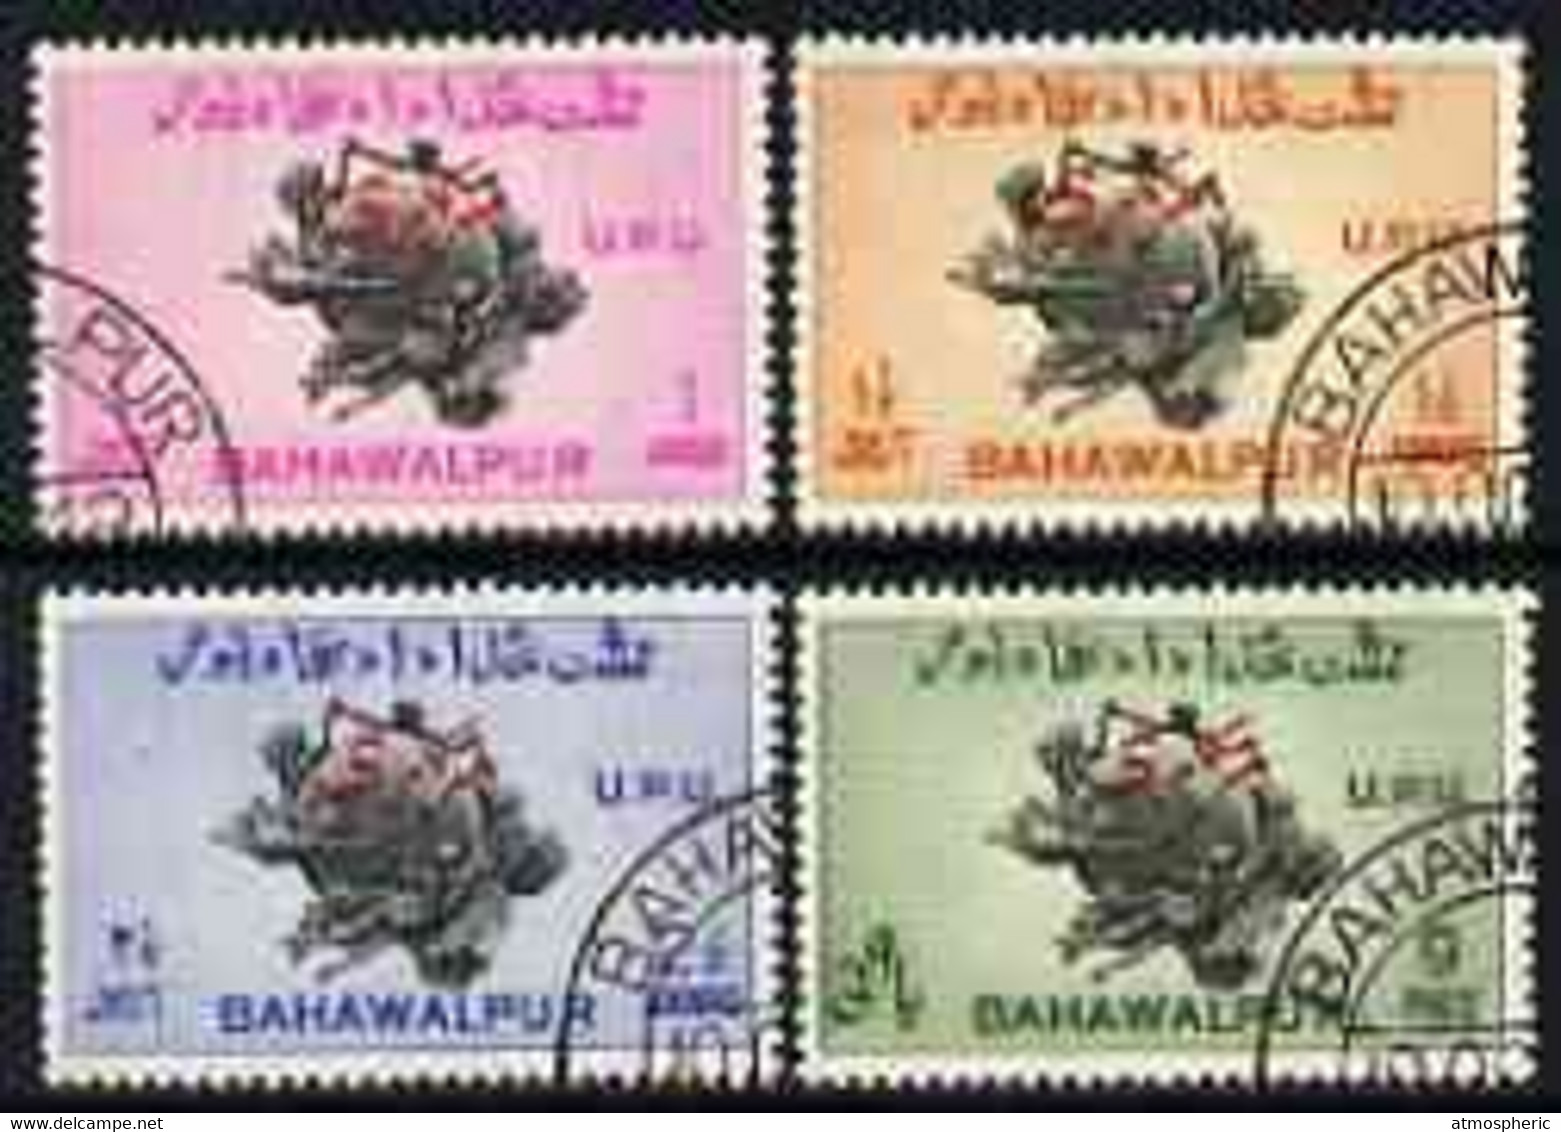 Bahawalpur 1949 KG6 75th Anniversary Of Universal Postal Union Set Of 4 With Red Arabic 'Official' Overprint Fine Cds Us - Bahawalpur